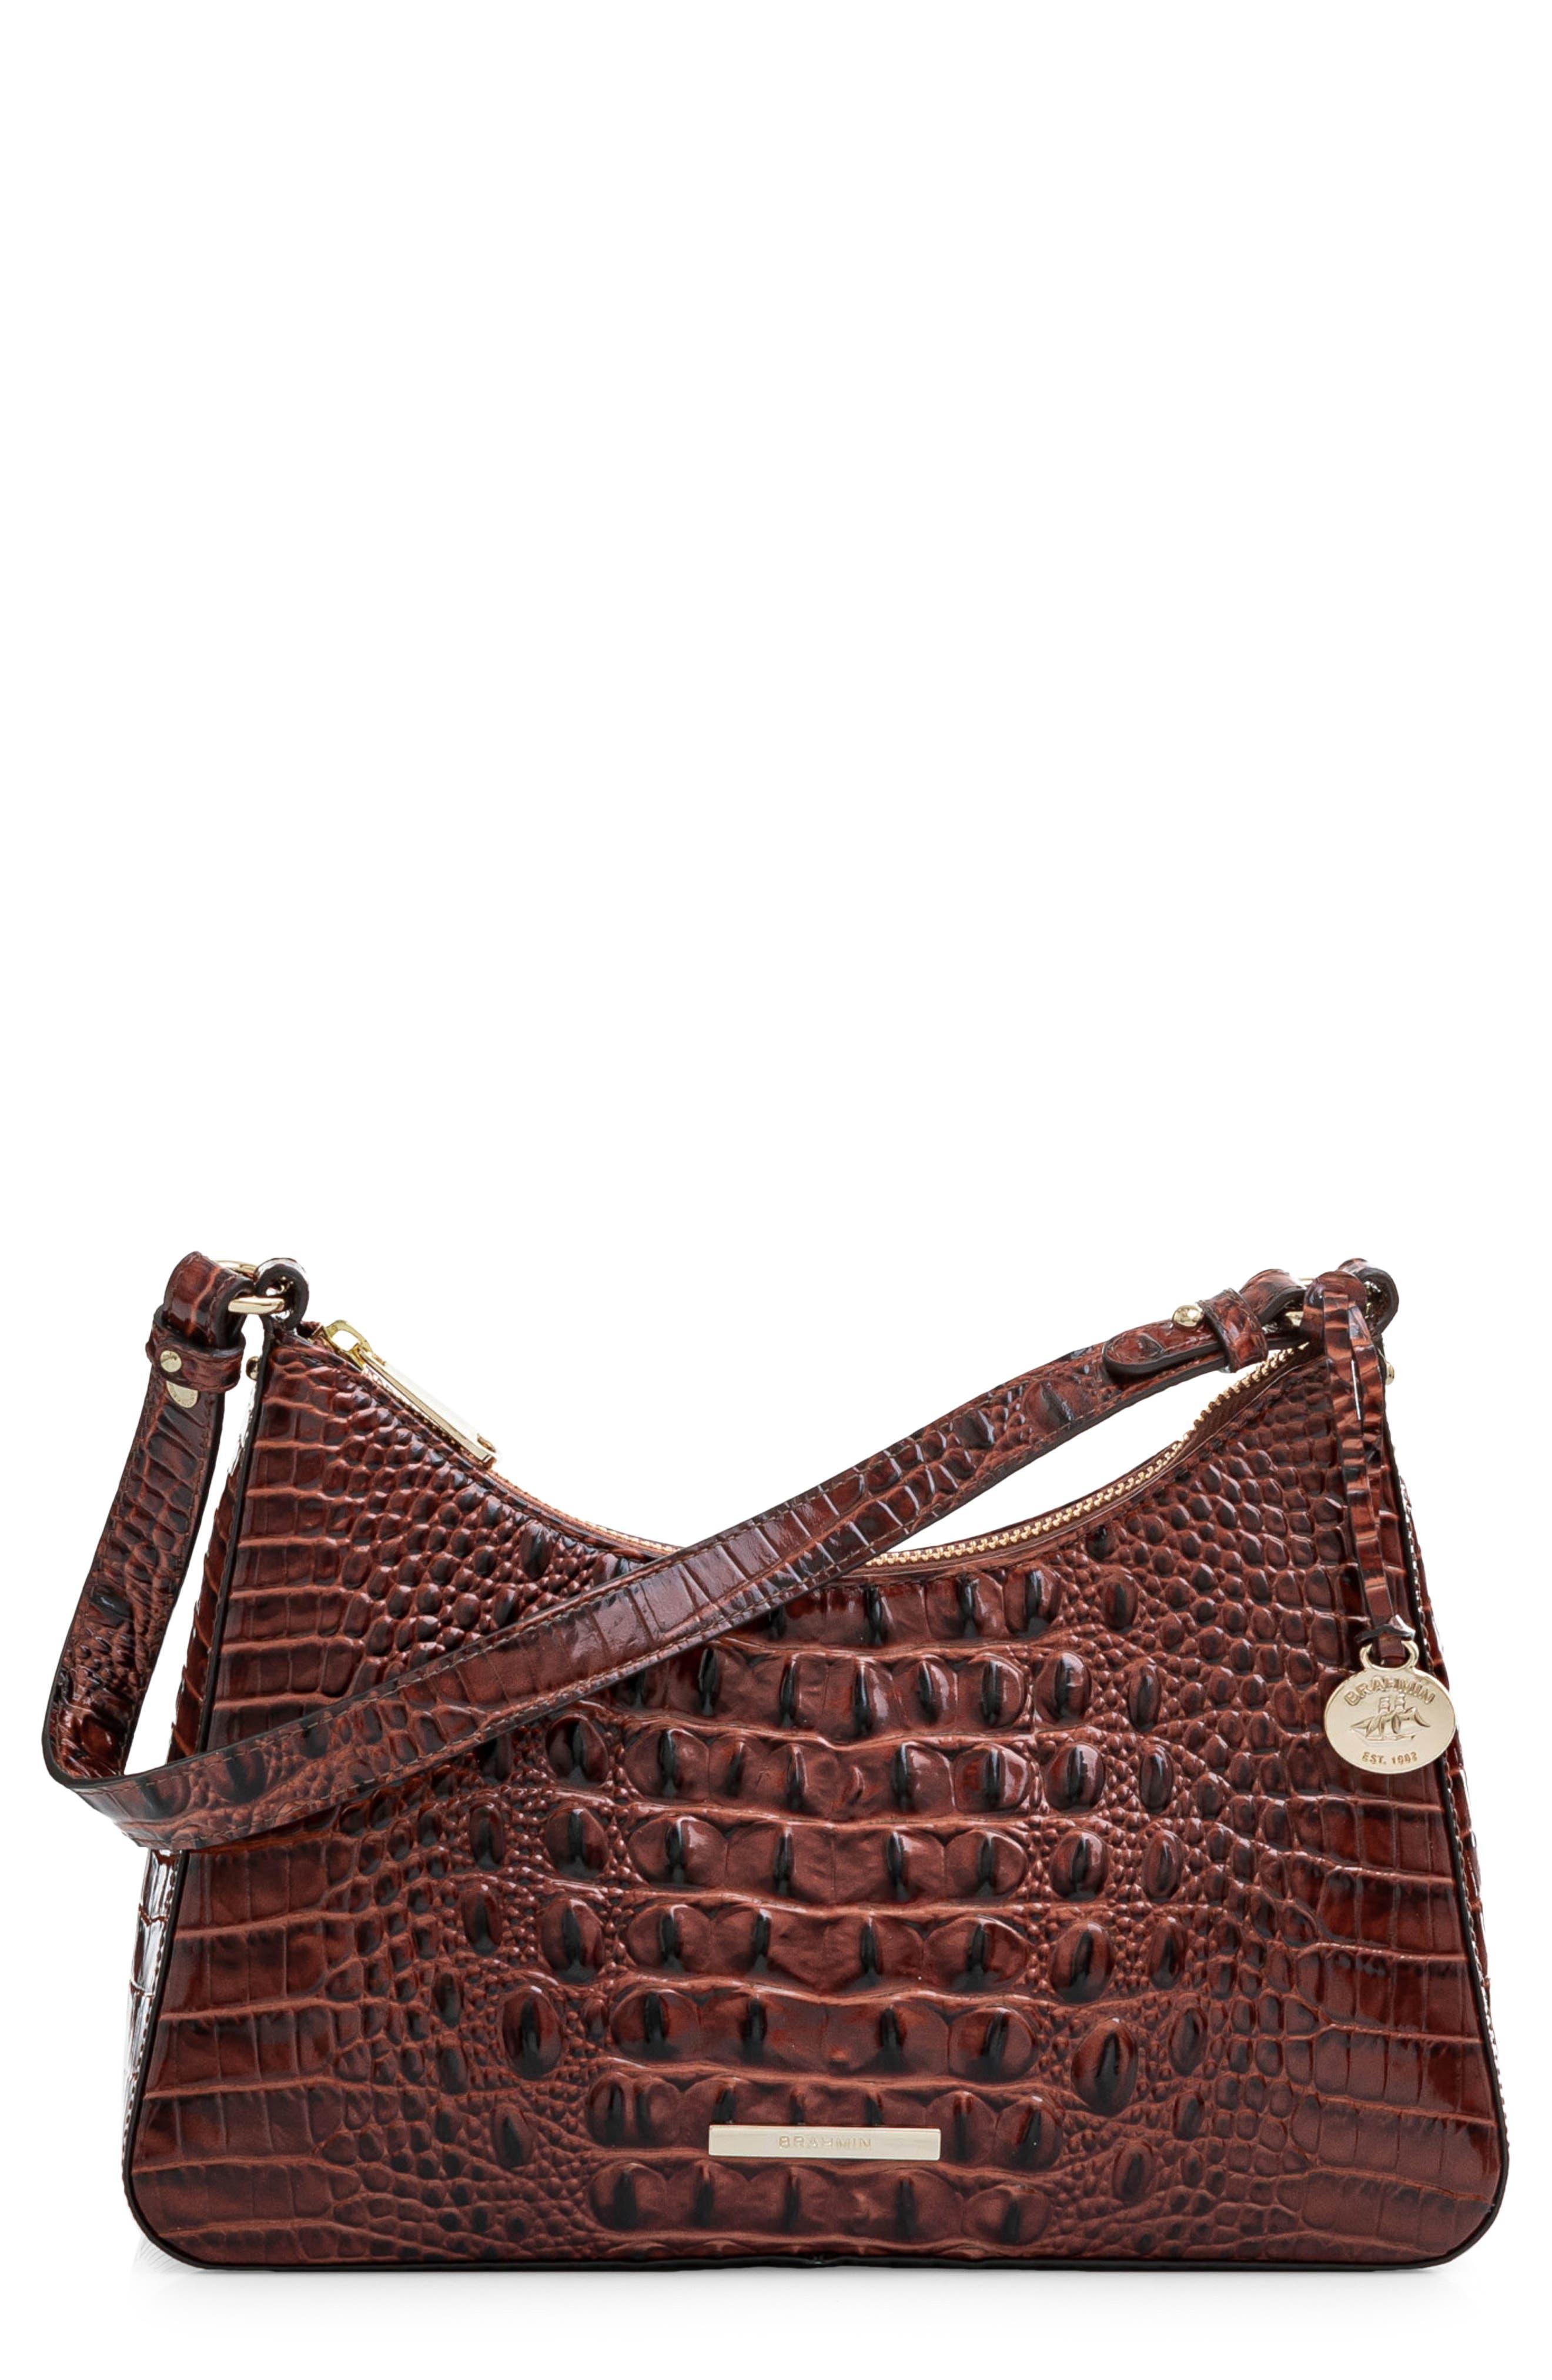 brahmin crossbody handbag purse pecan brown leather croc embossed